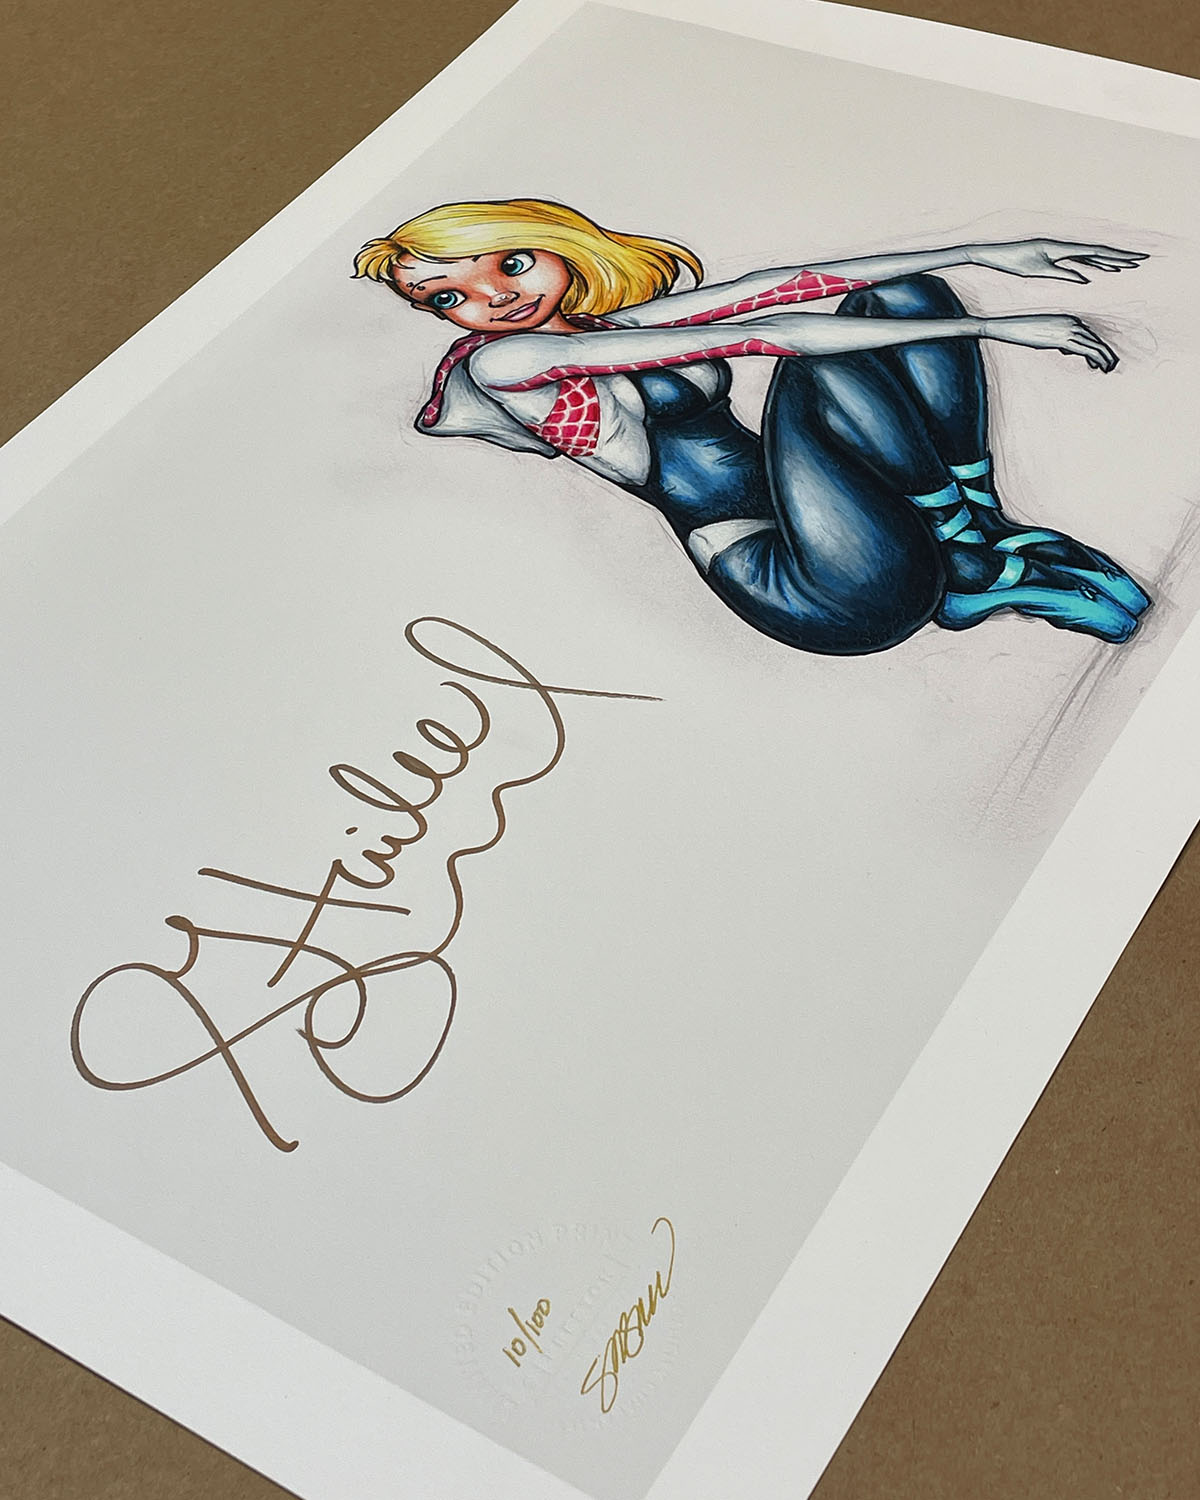 Gwen En Point Sketch Print - Hailee Steinfeld Autograph (Authenticated)